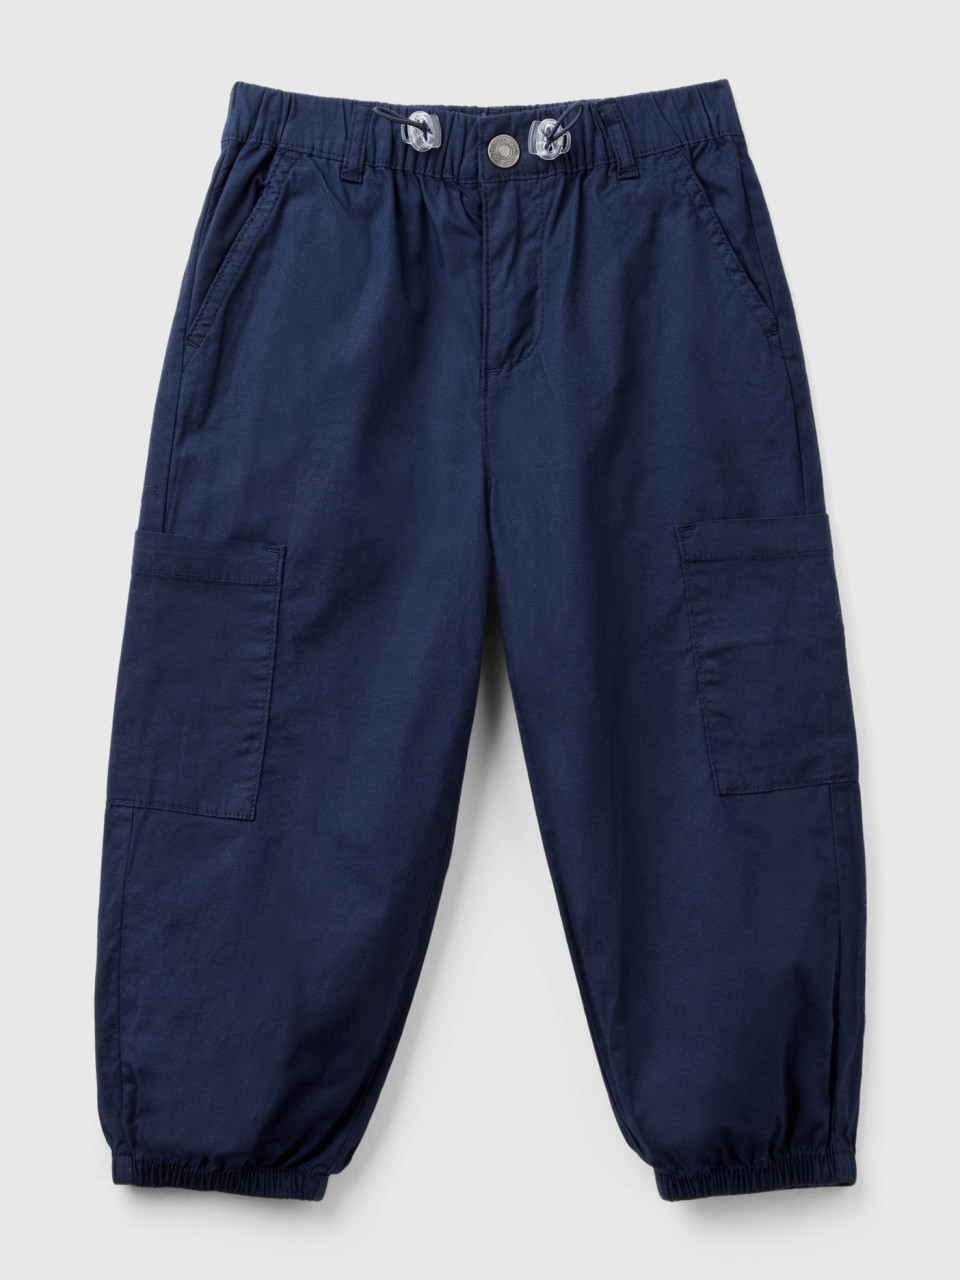 Benetton, Stretch Cotton Parachute Trousers, Dark Blue, Kids